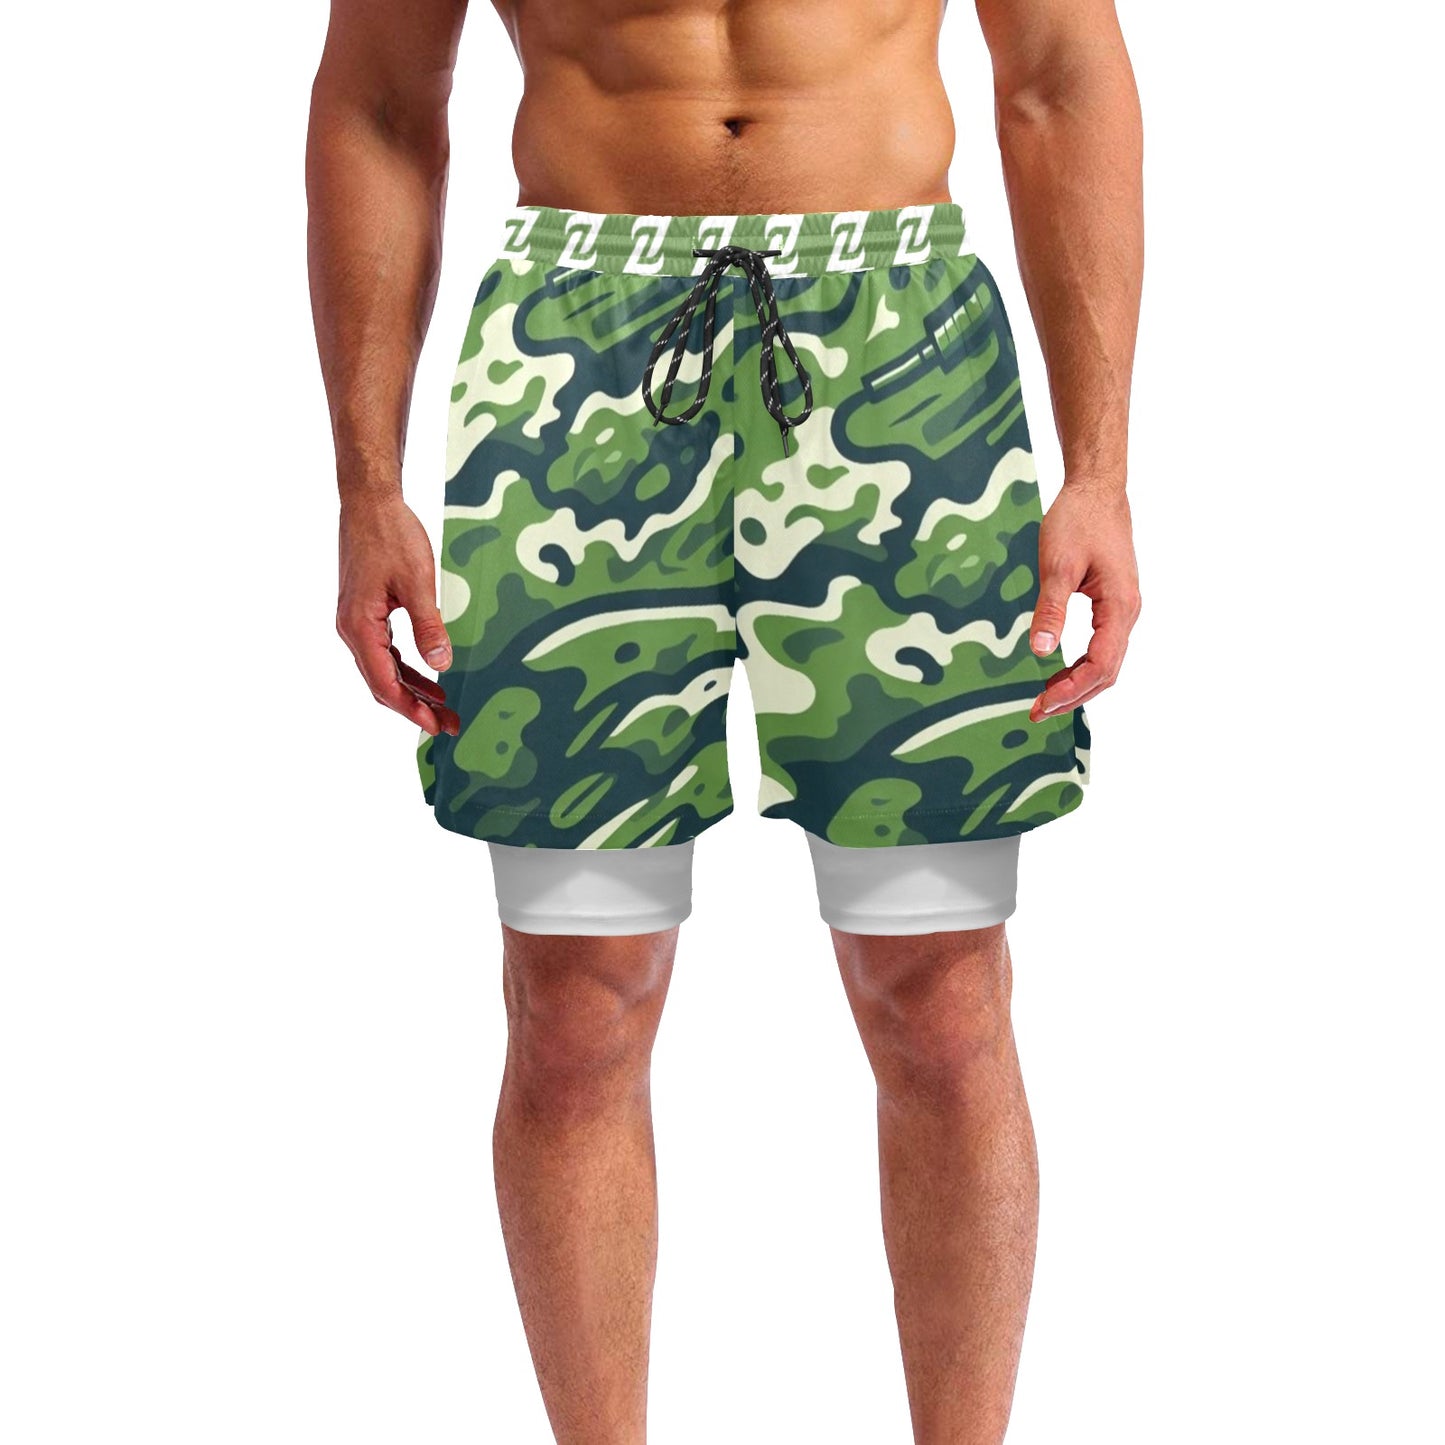 Zen Shorts with Liner - Green Camo